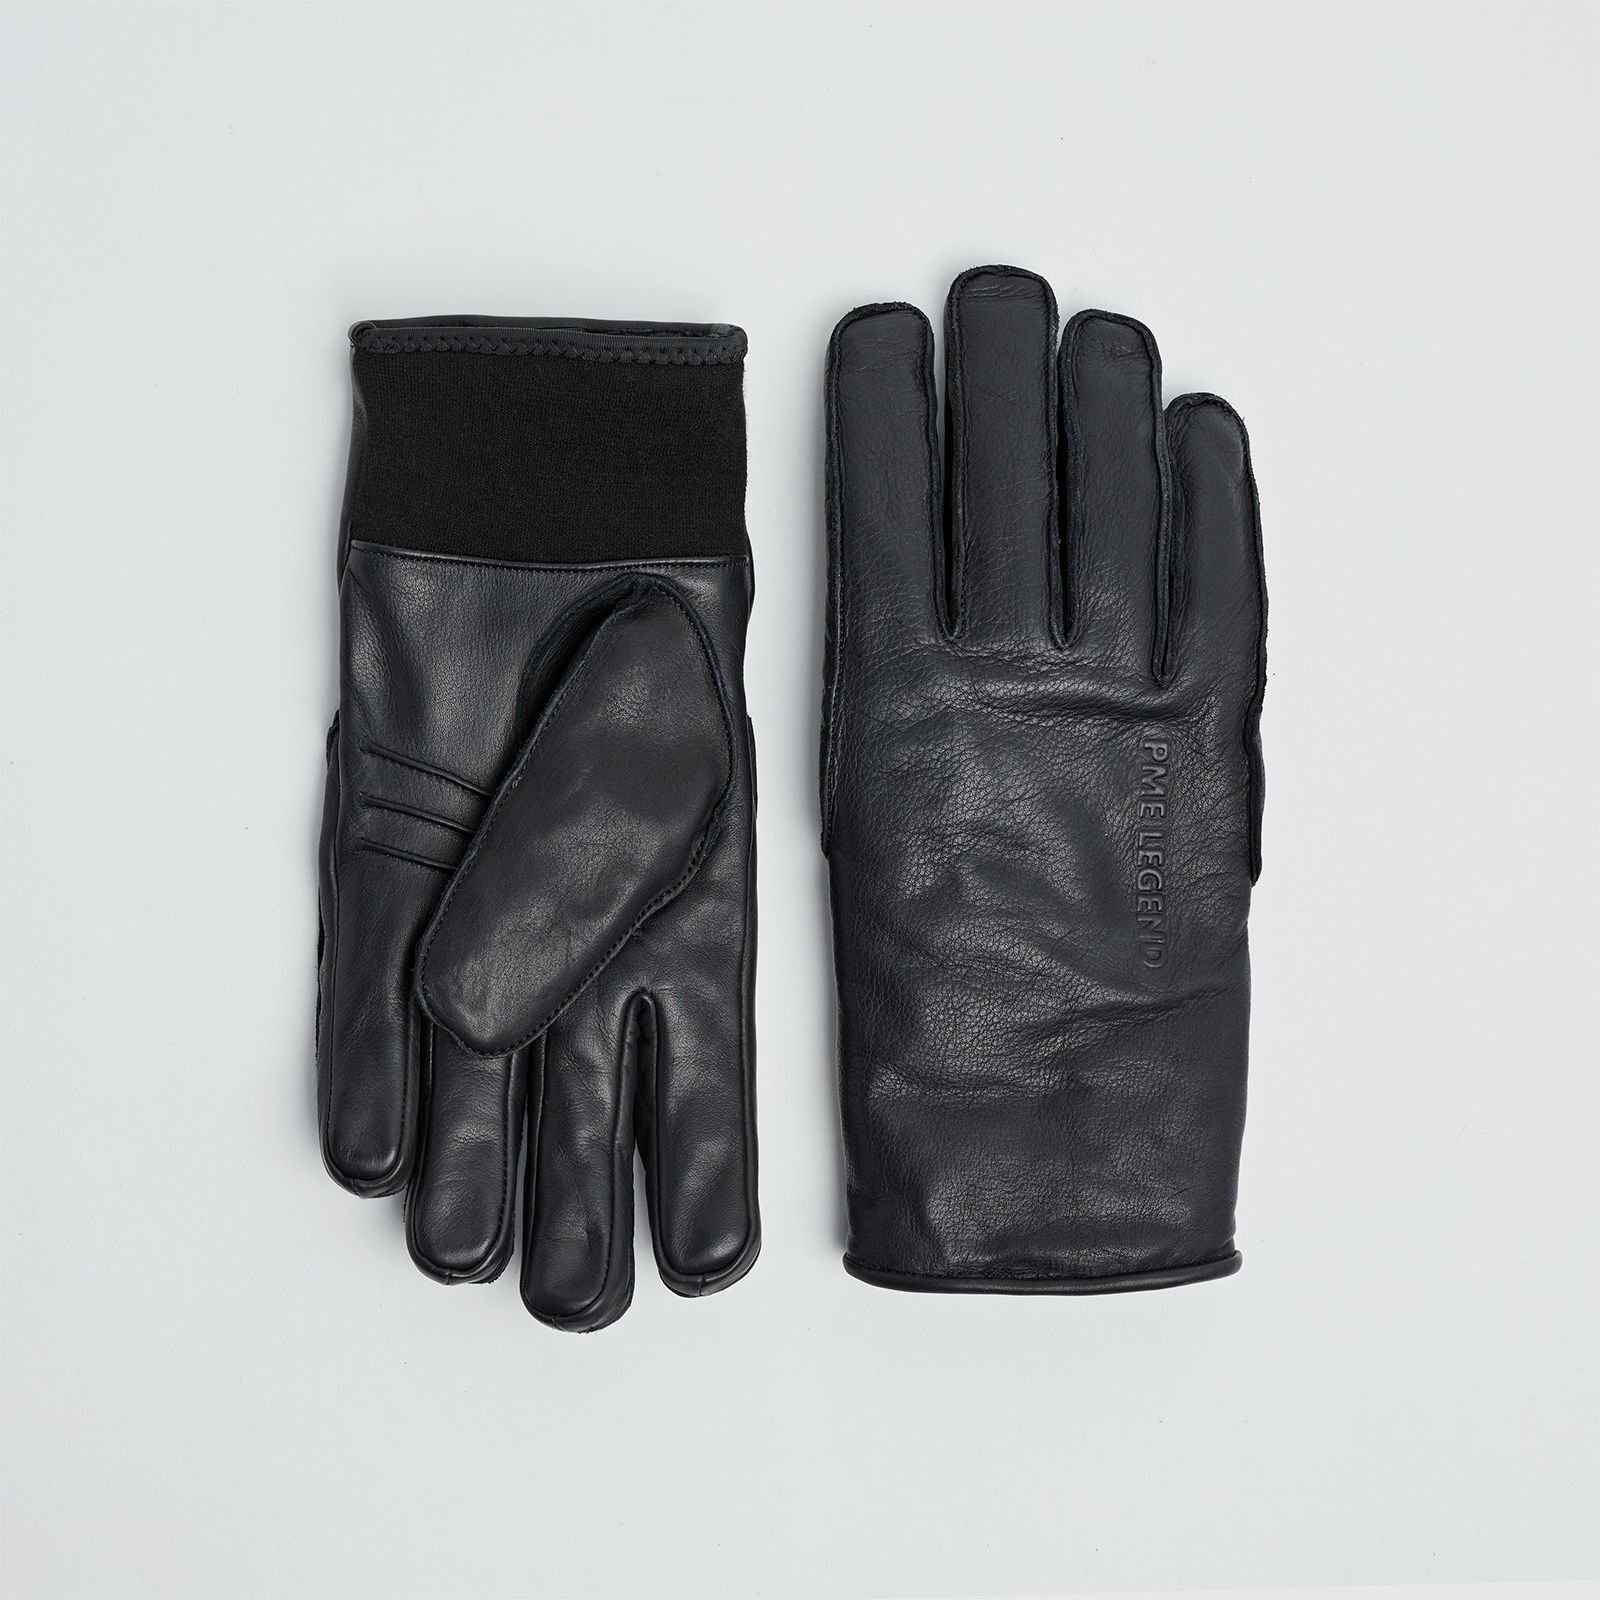 Pme Legend Glove Leather Black Dull 00105913-9991